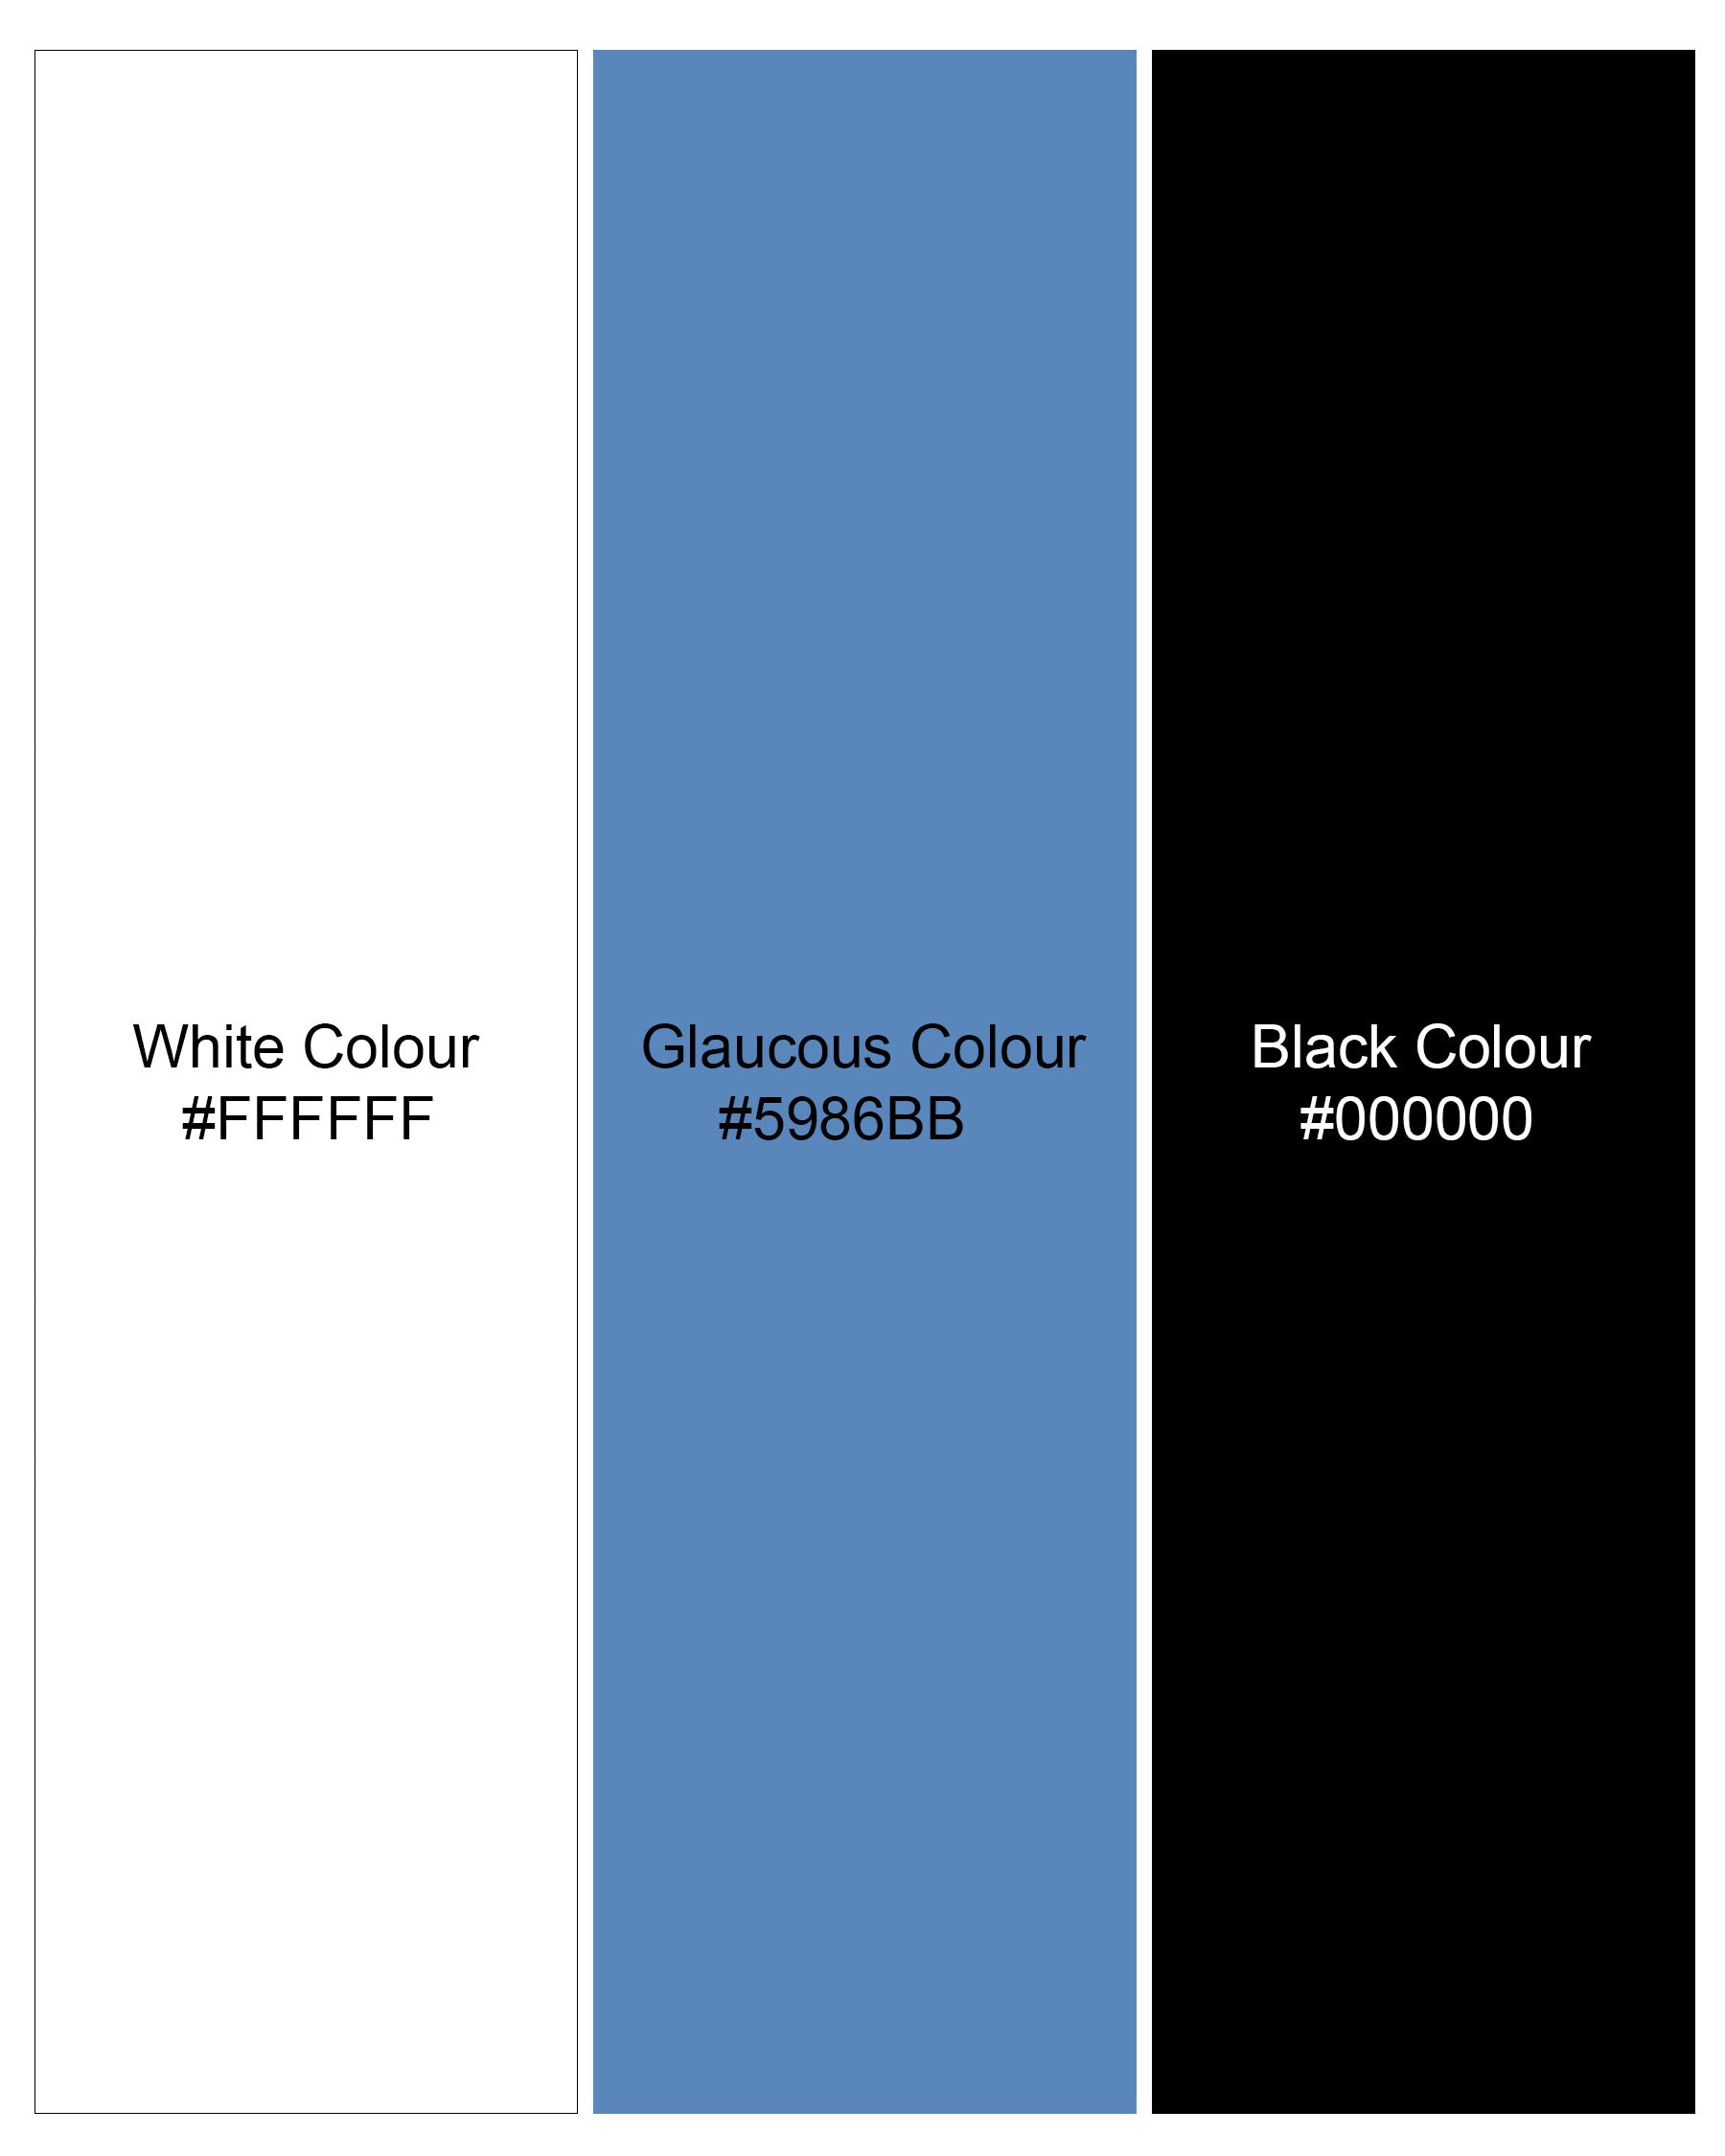 Glaucous Blue with White Striped Dobby Textured Premium Giza Cotton Shirt 8000-CA,8000-CA-H-38,8000-CA-39,8000-CA-H-39,8000-CA-40,8000-CA-H-40,8000-CA-42,8000-CA-H-42,8000-CA-44,8000-CA-H-44,8000-CA-46,8000-CA-H-46,8000-CA-48,8000-CA-H-48,8000-CA-50,8000-CA-H-50,8000-CA-52,8000-CA-H-52